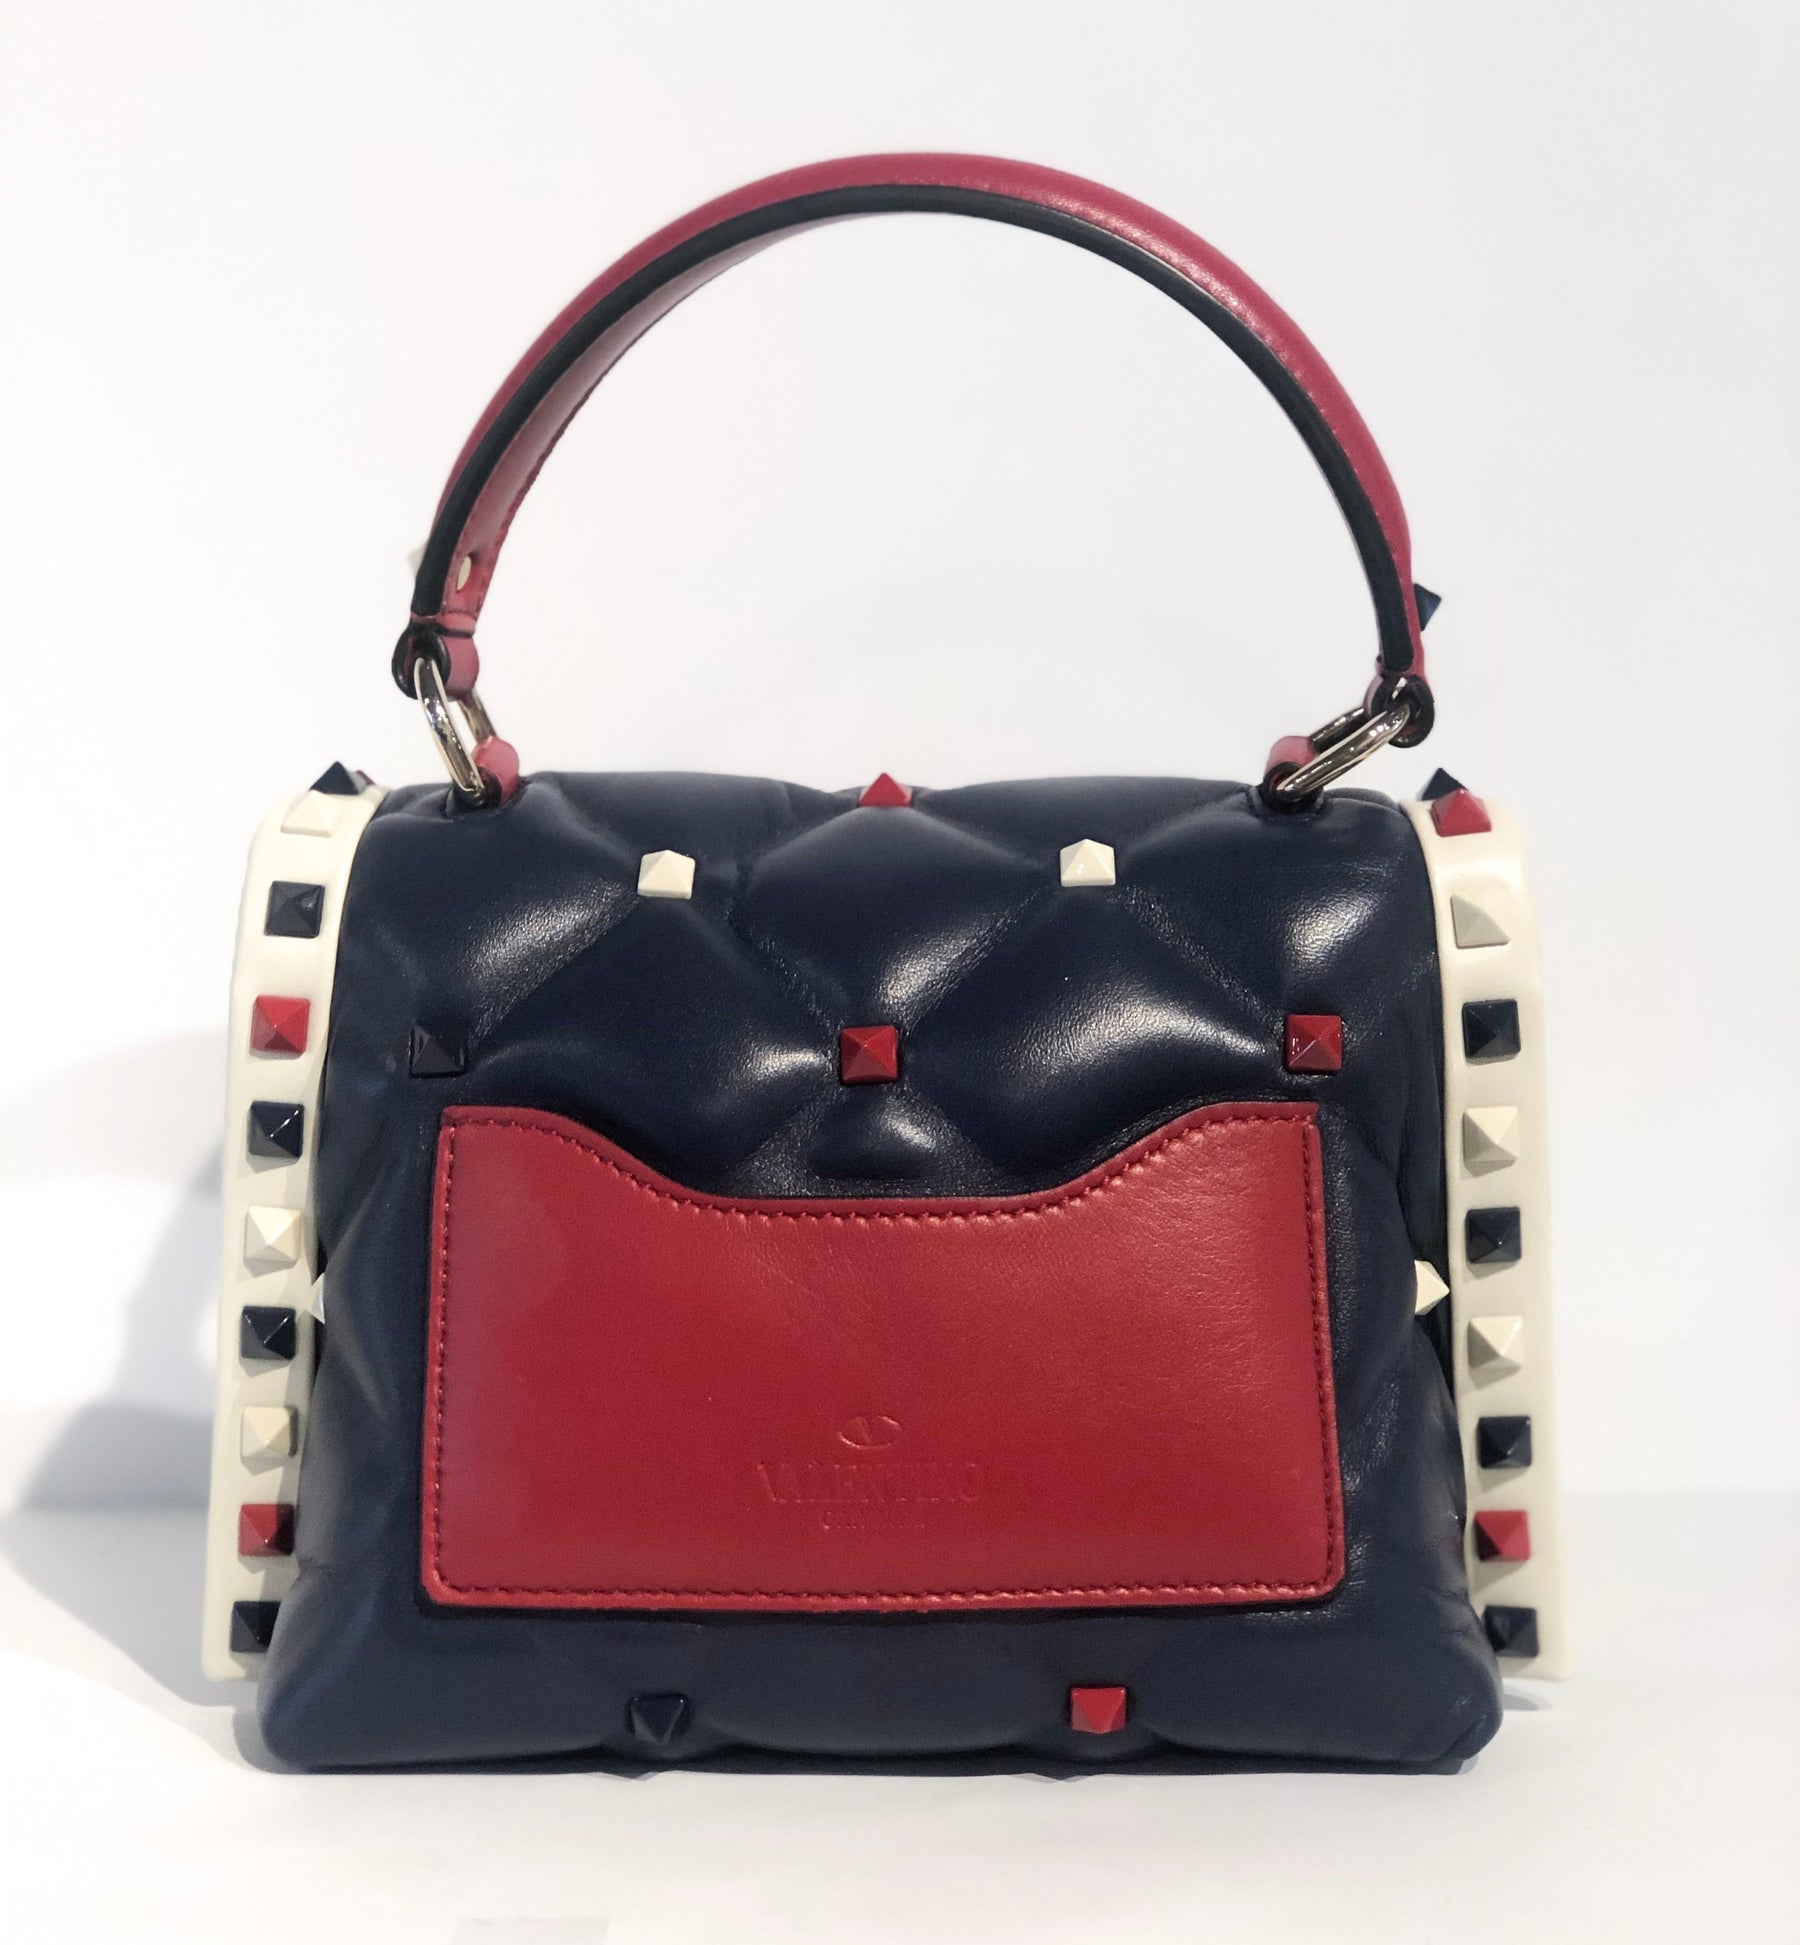 Valentino Navy Candy Stud Bag Back of Bag featuring Back Pocket